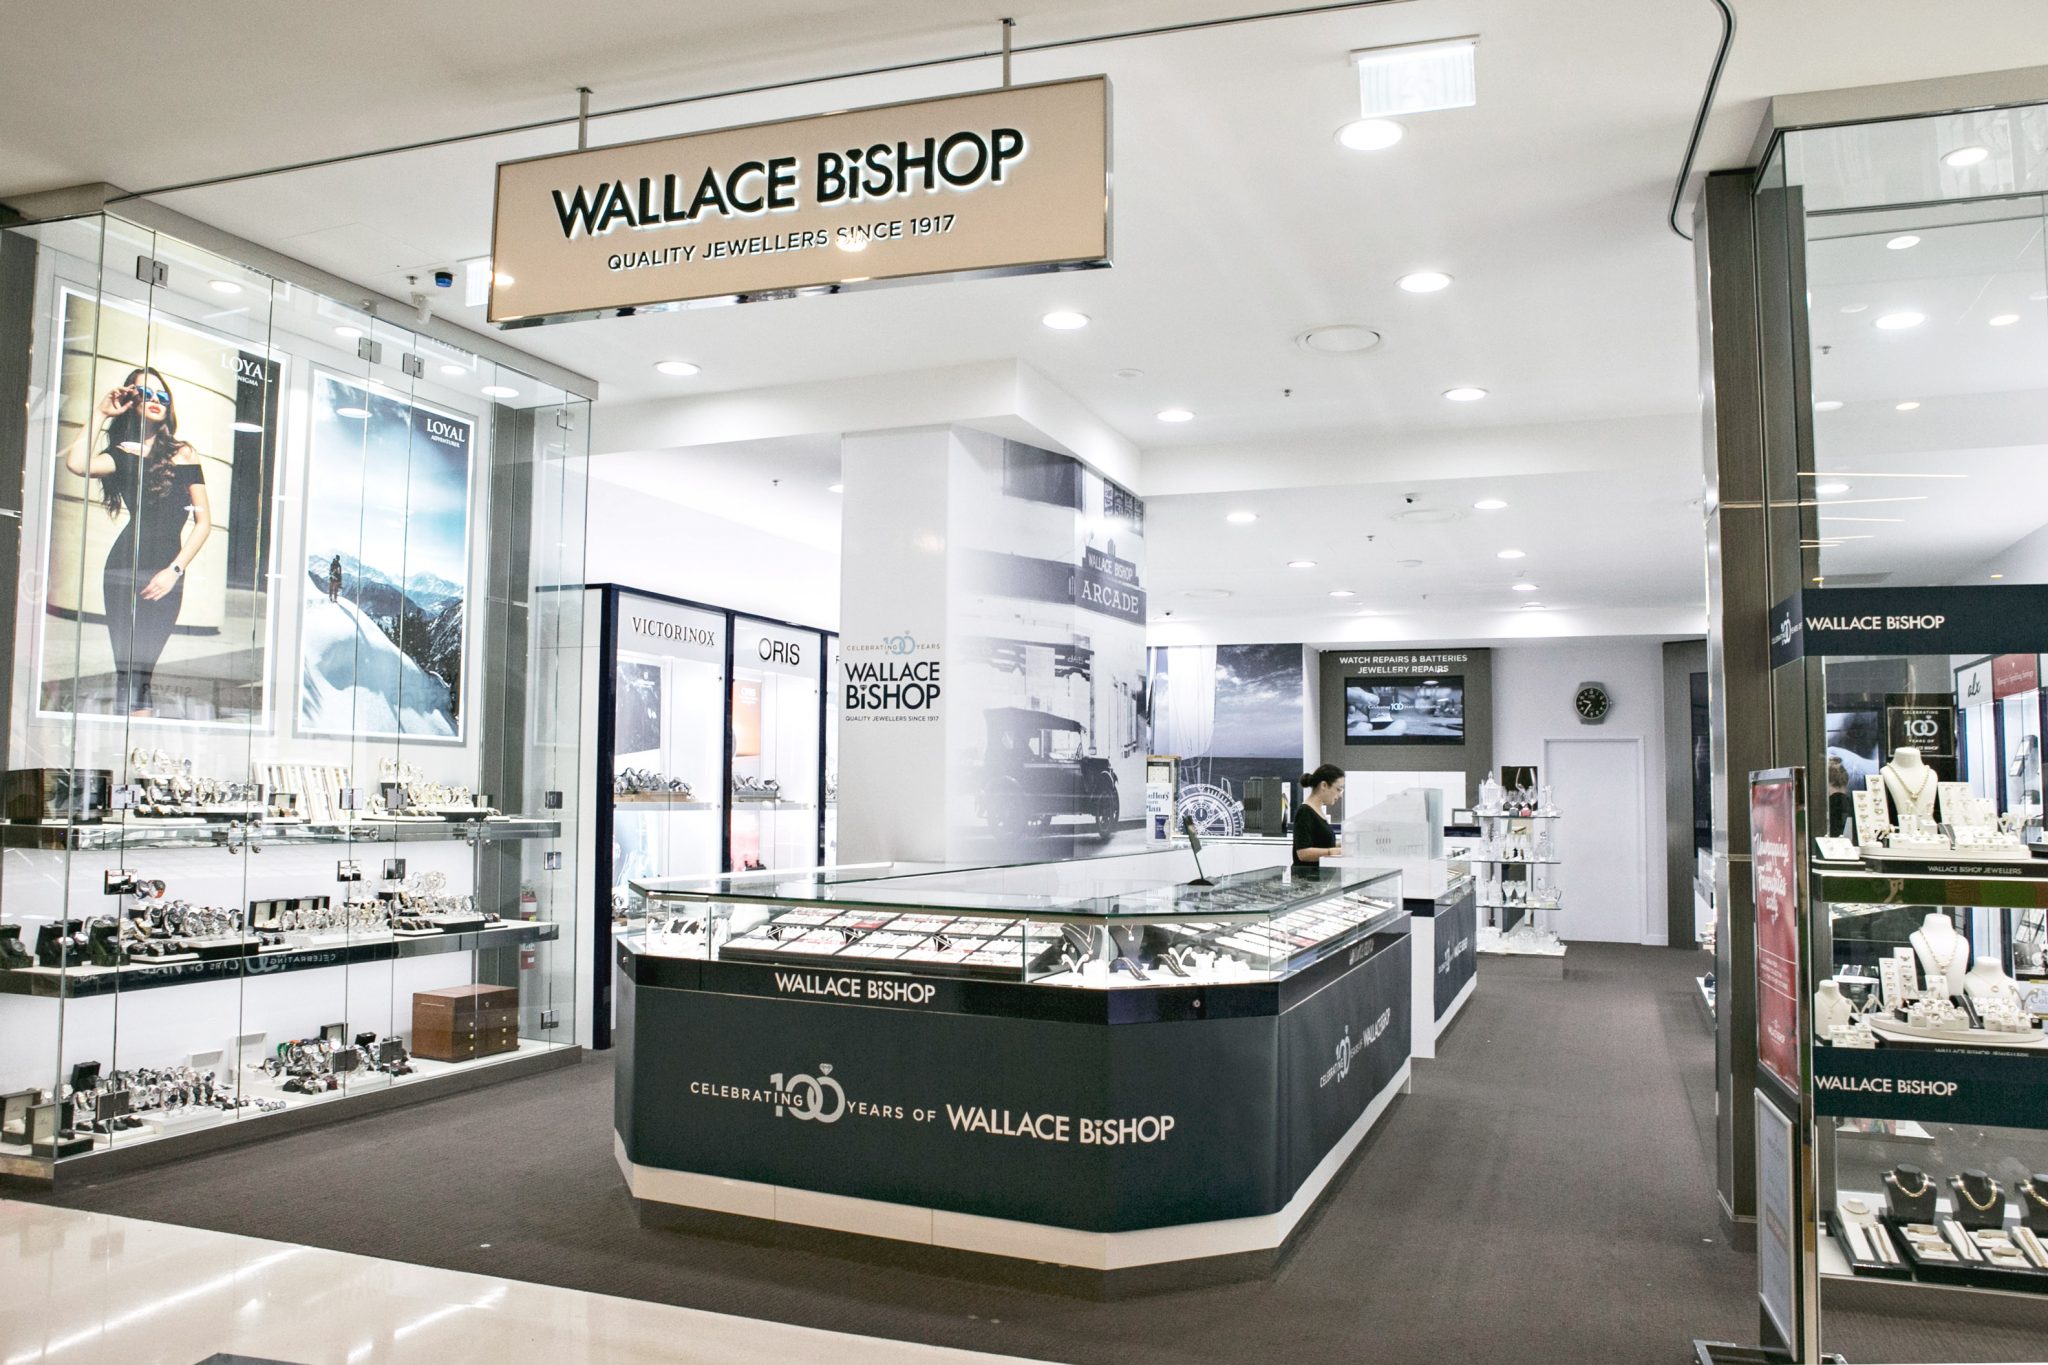 Wallace Bishop – Cairns